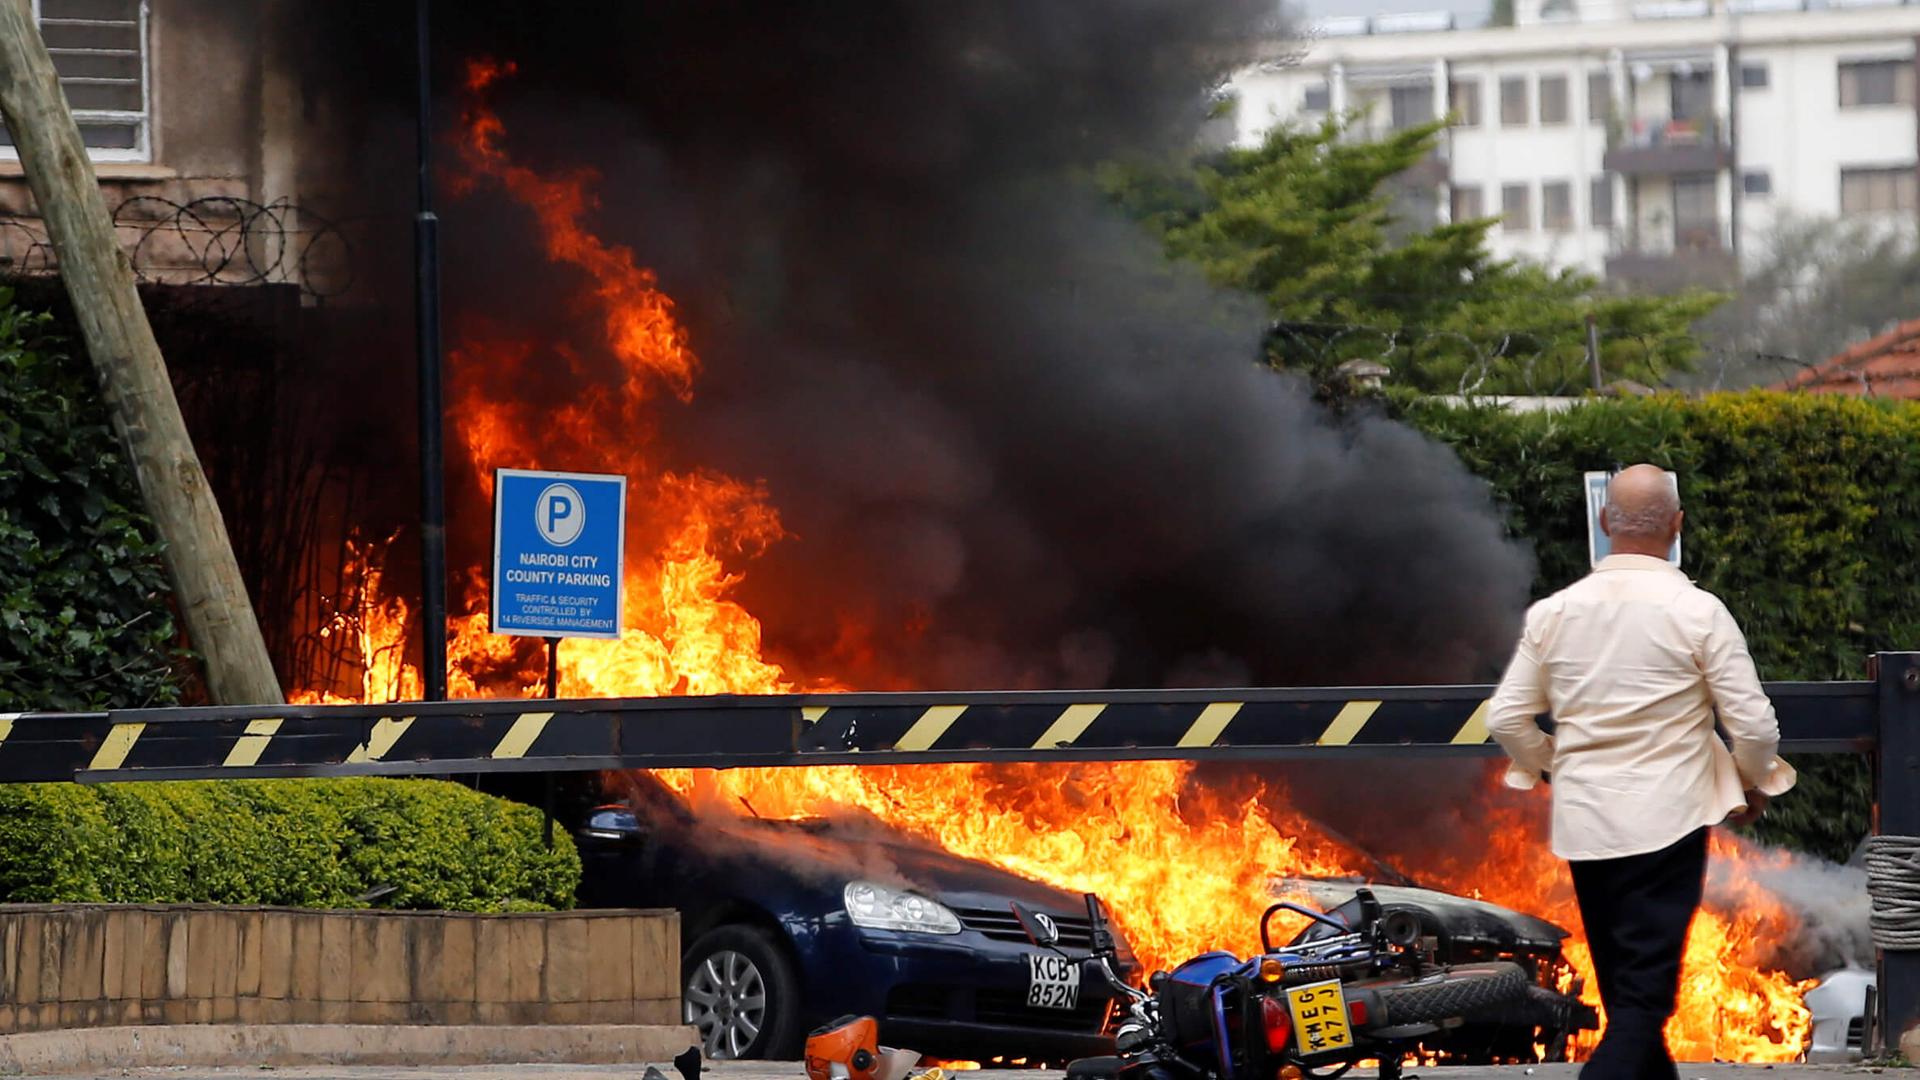 Car ablaze near hotel rocked by terrorist attack.